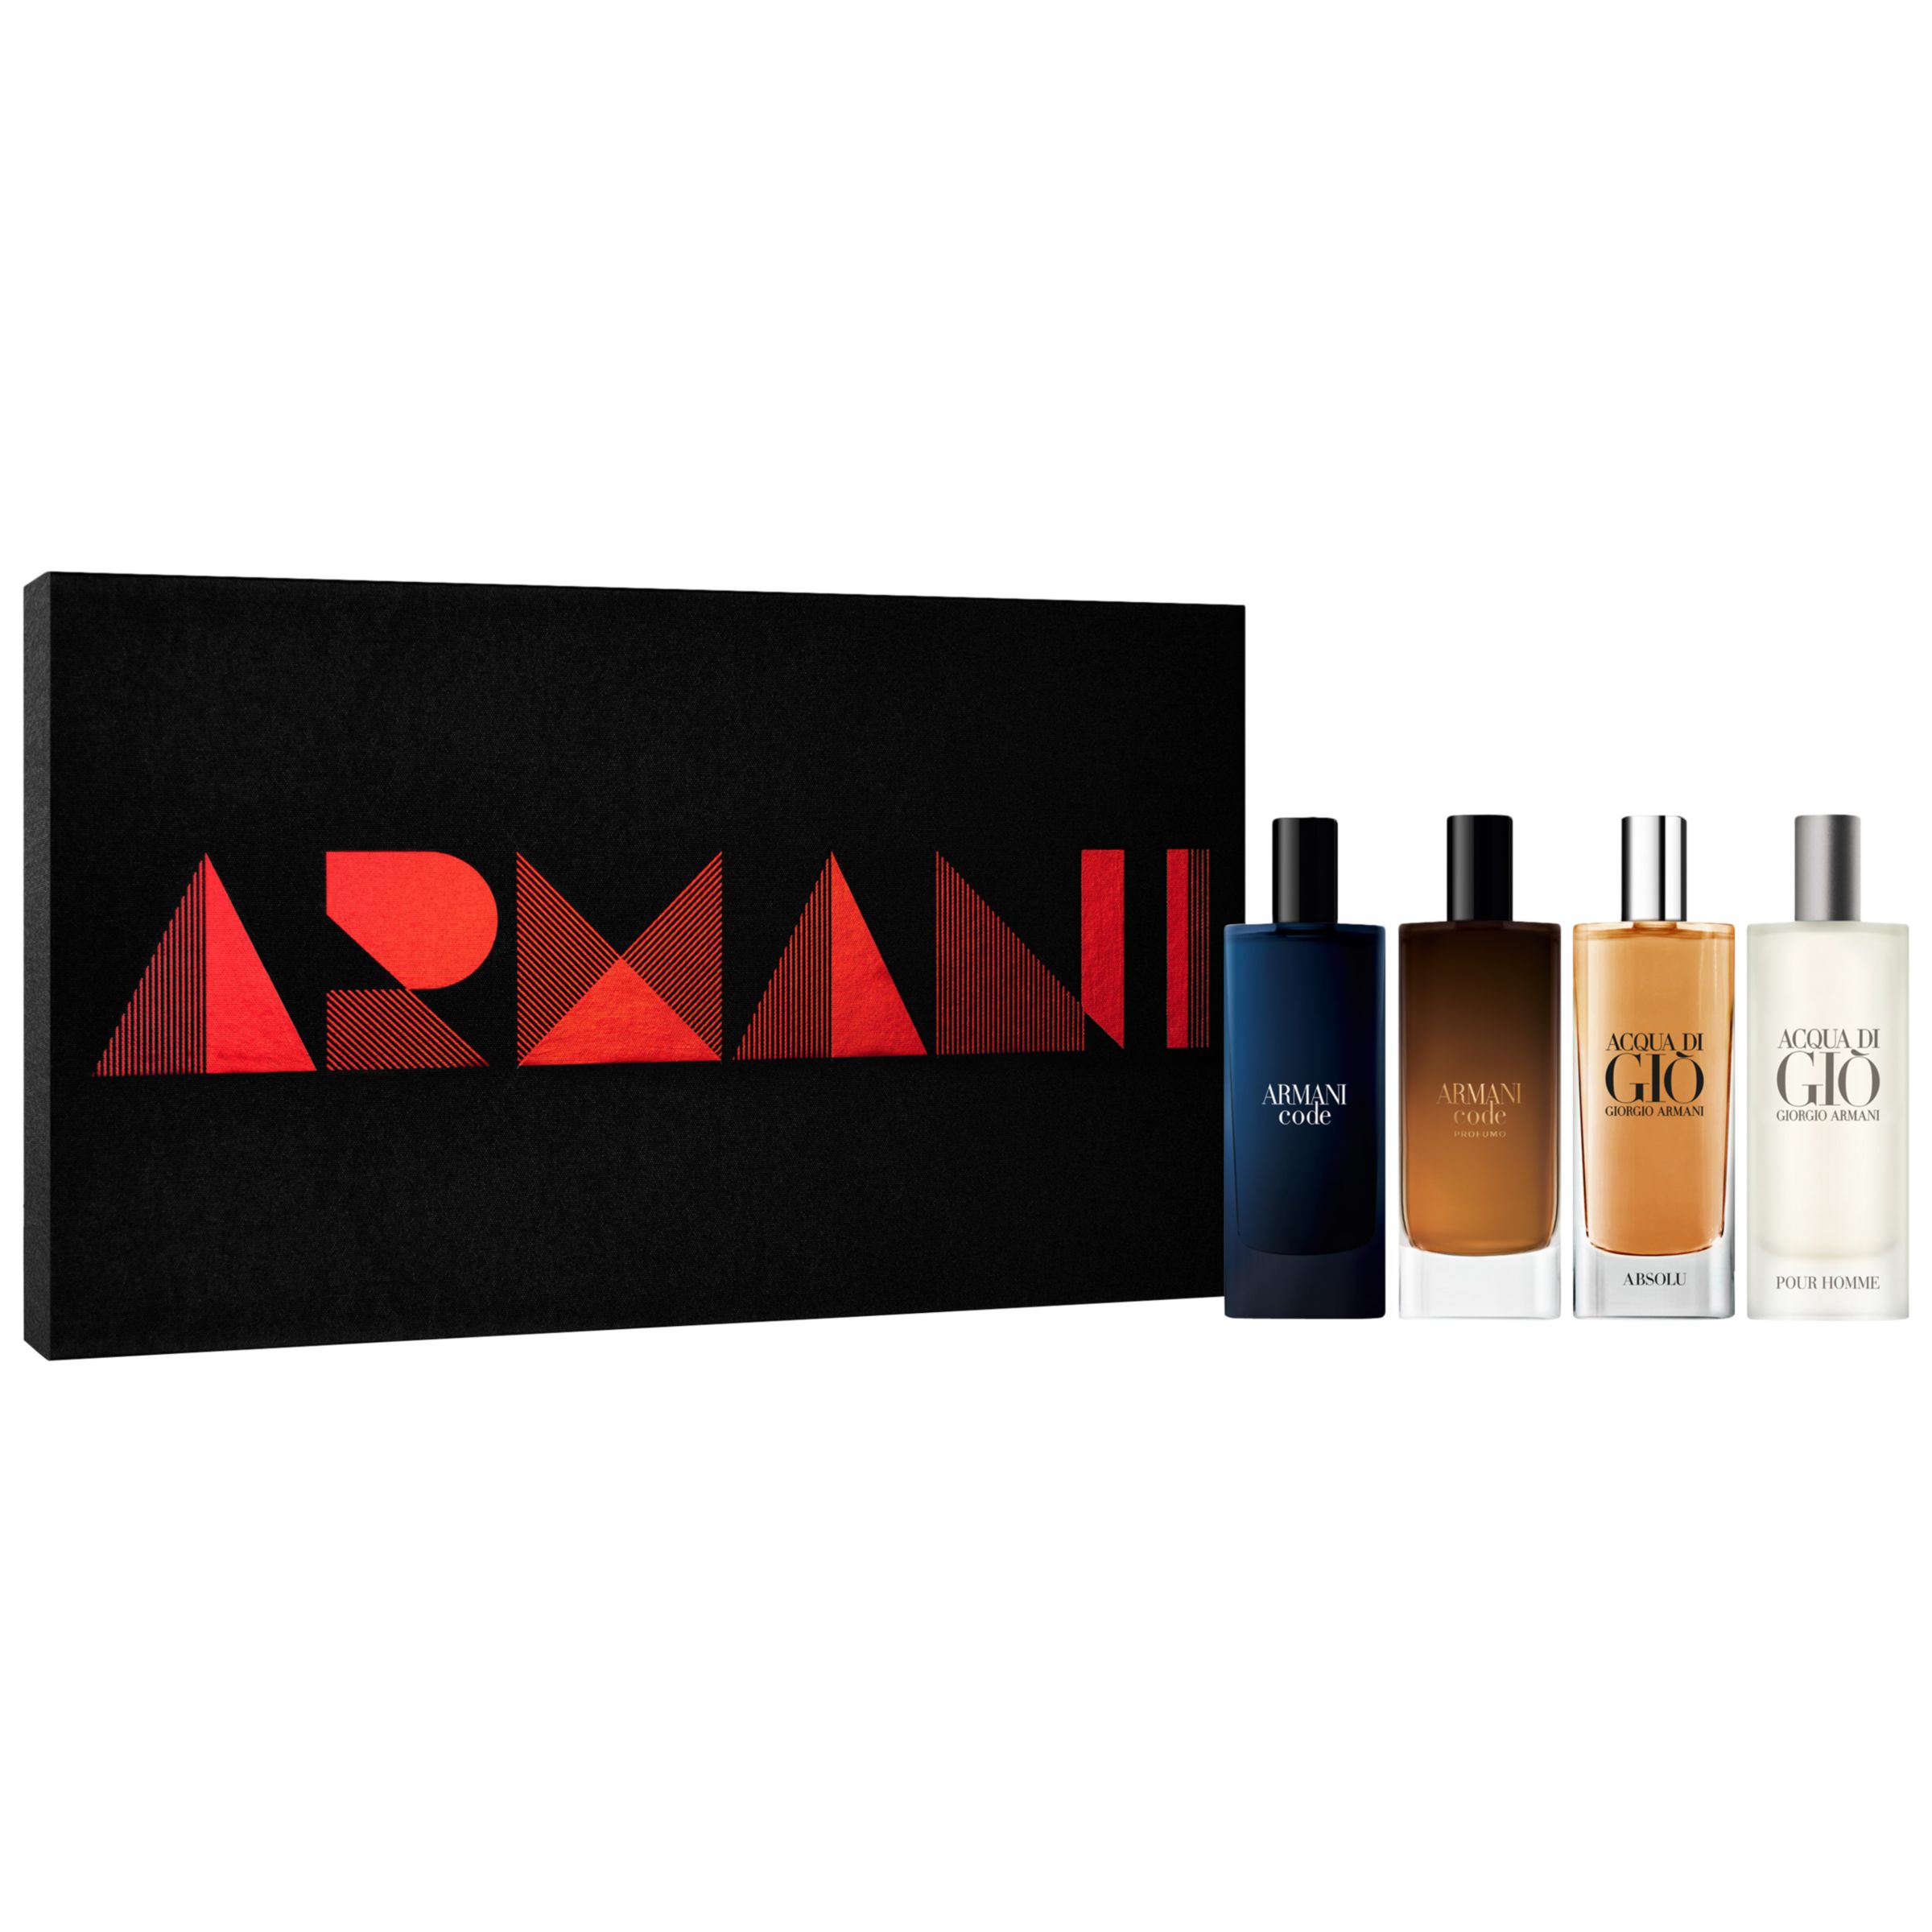 giorgio armani men's fragrance gift set